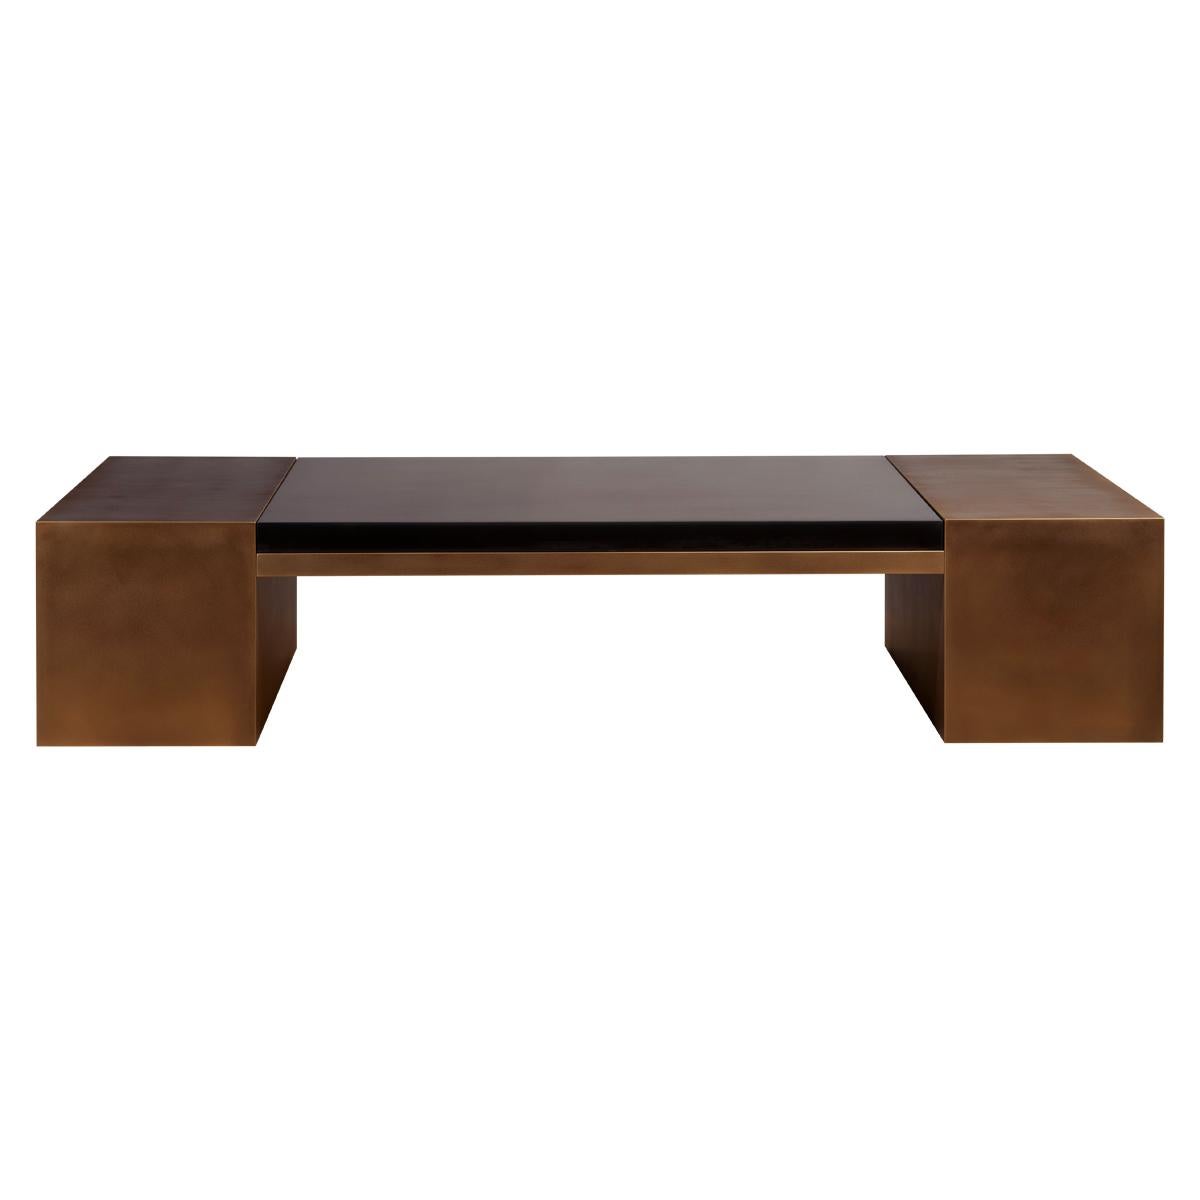 LUMA Design Workshop Block Coffee Table in Dark Resin and Textured Bronze Metal For Sale